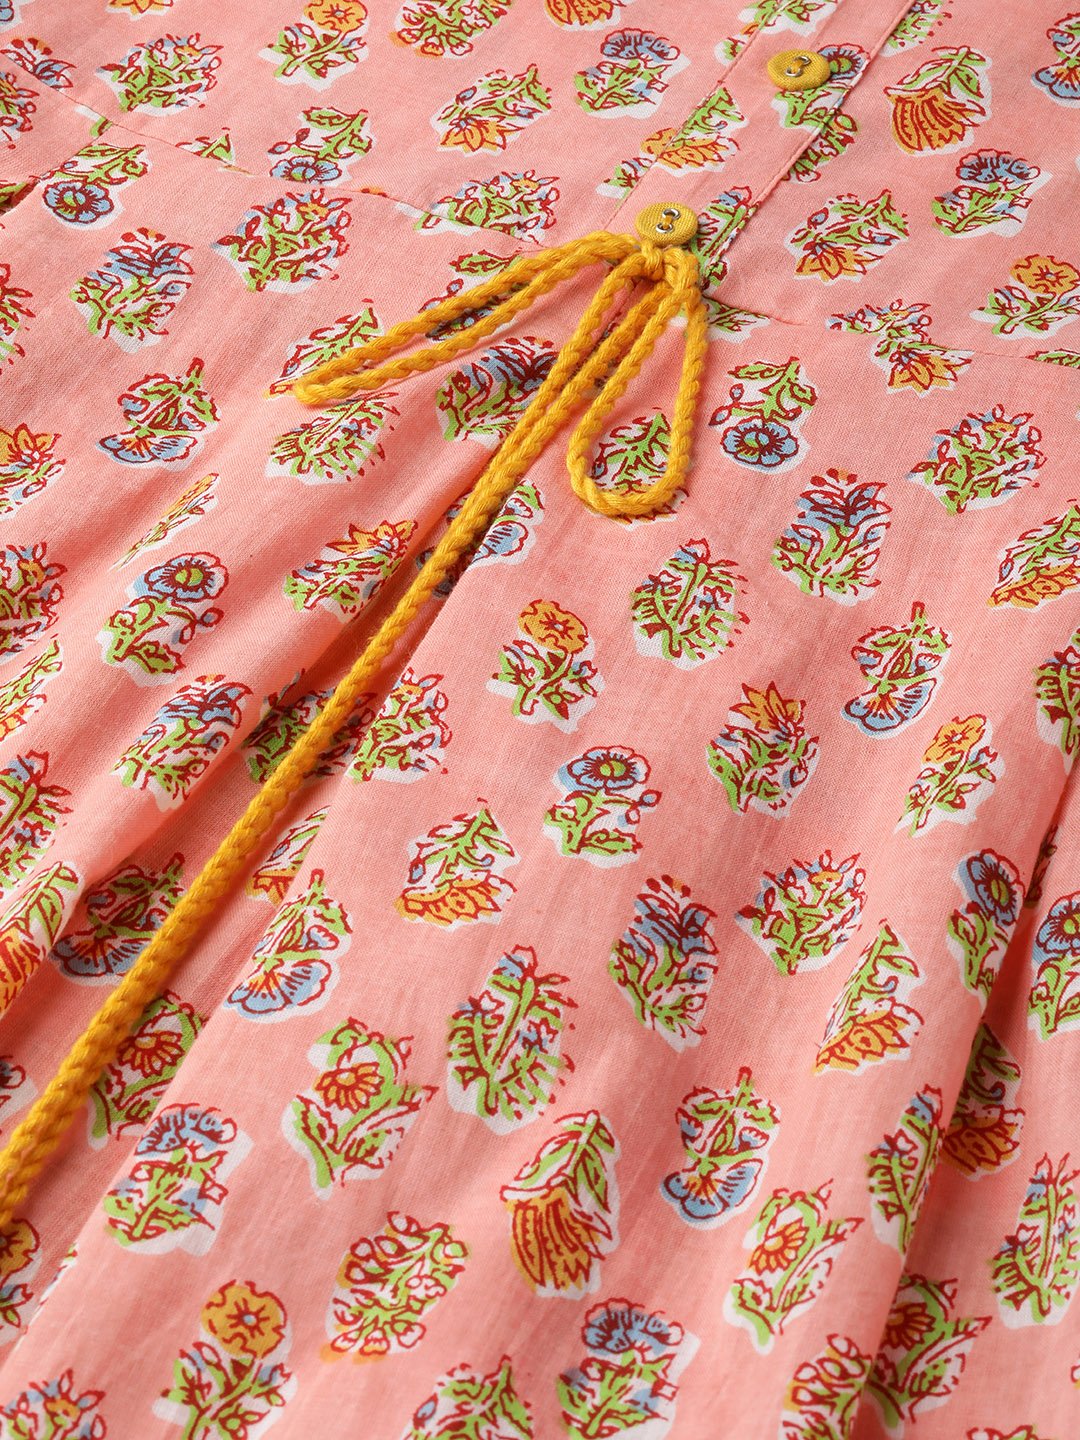 Women's Peach Ethnic Motifs Printed Round Neck Cotton Maxi Dress - Nayo Clothing